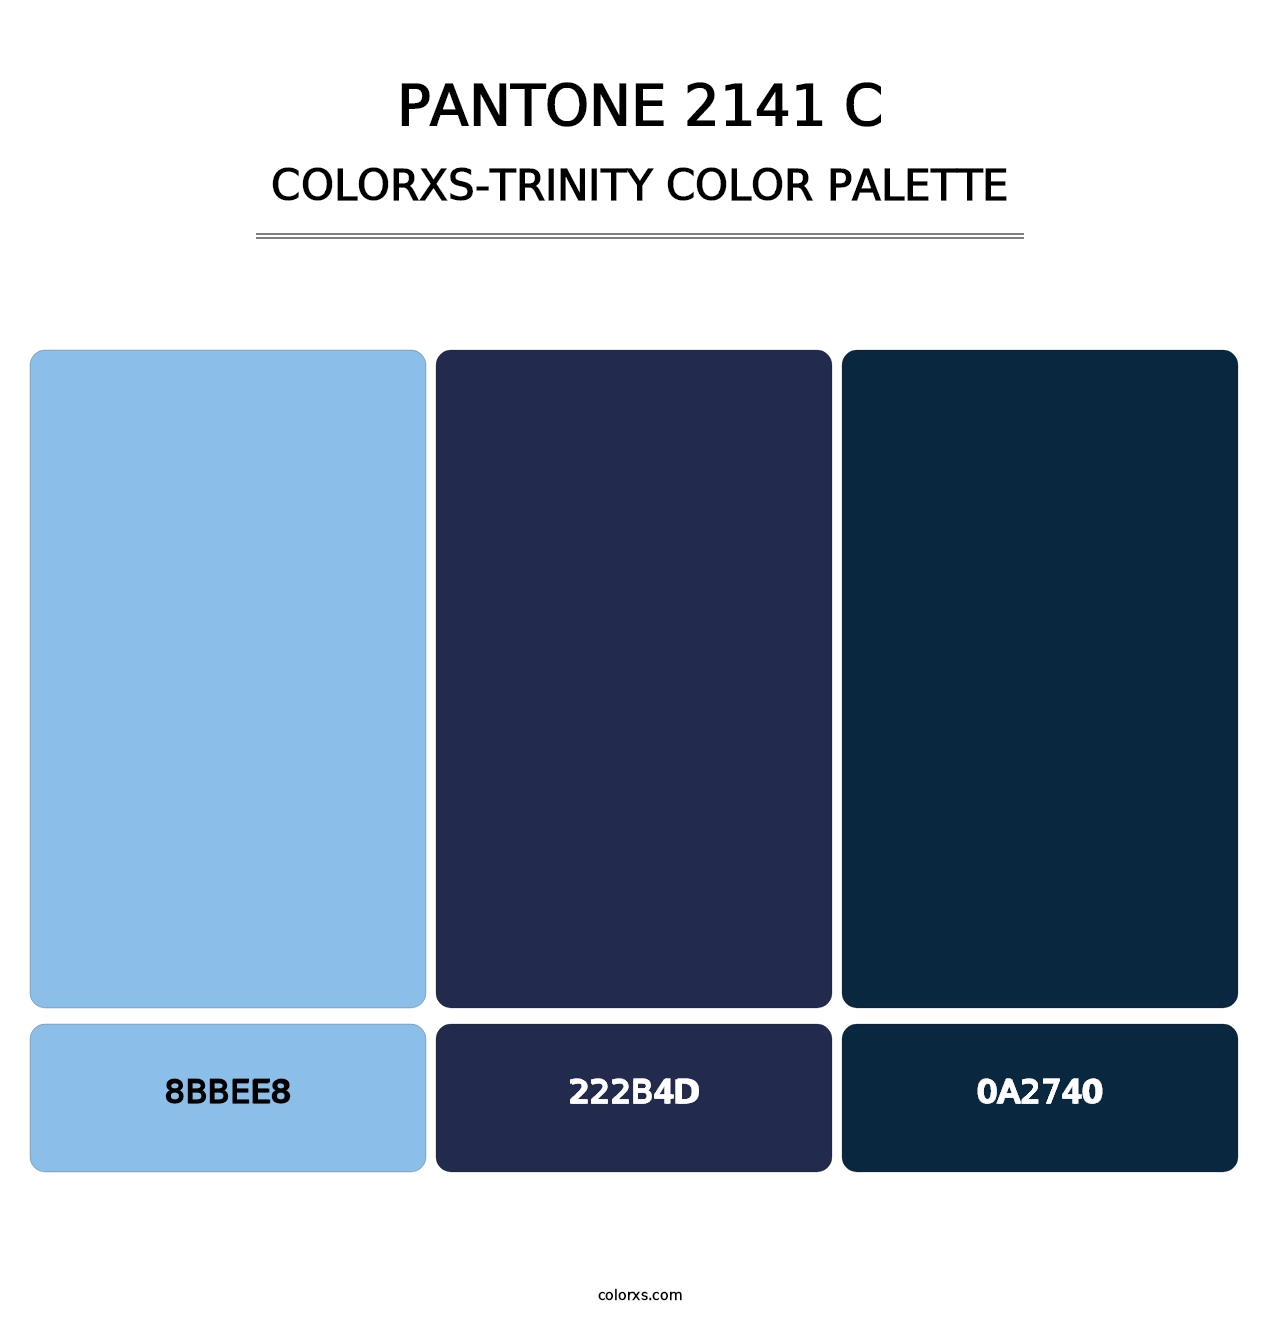 PANTONE 2141 C - Colorxs Trinity Palette